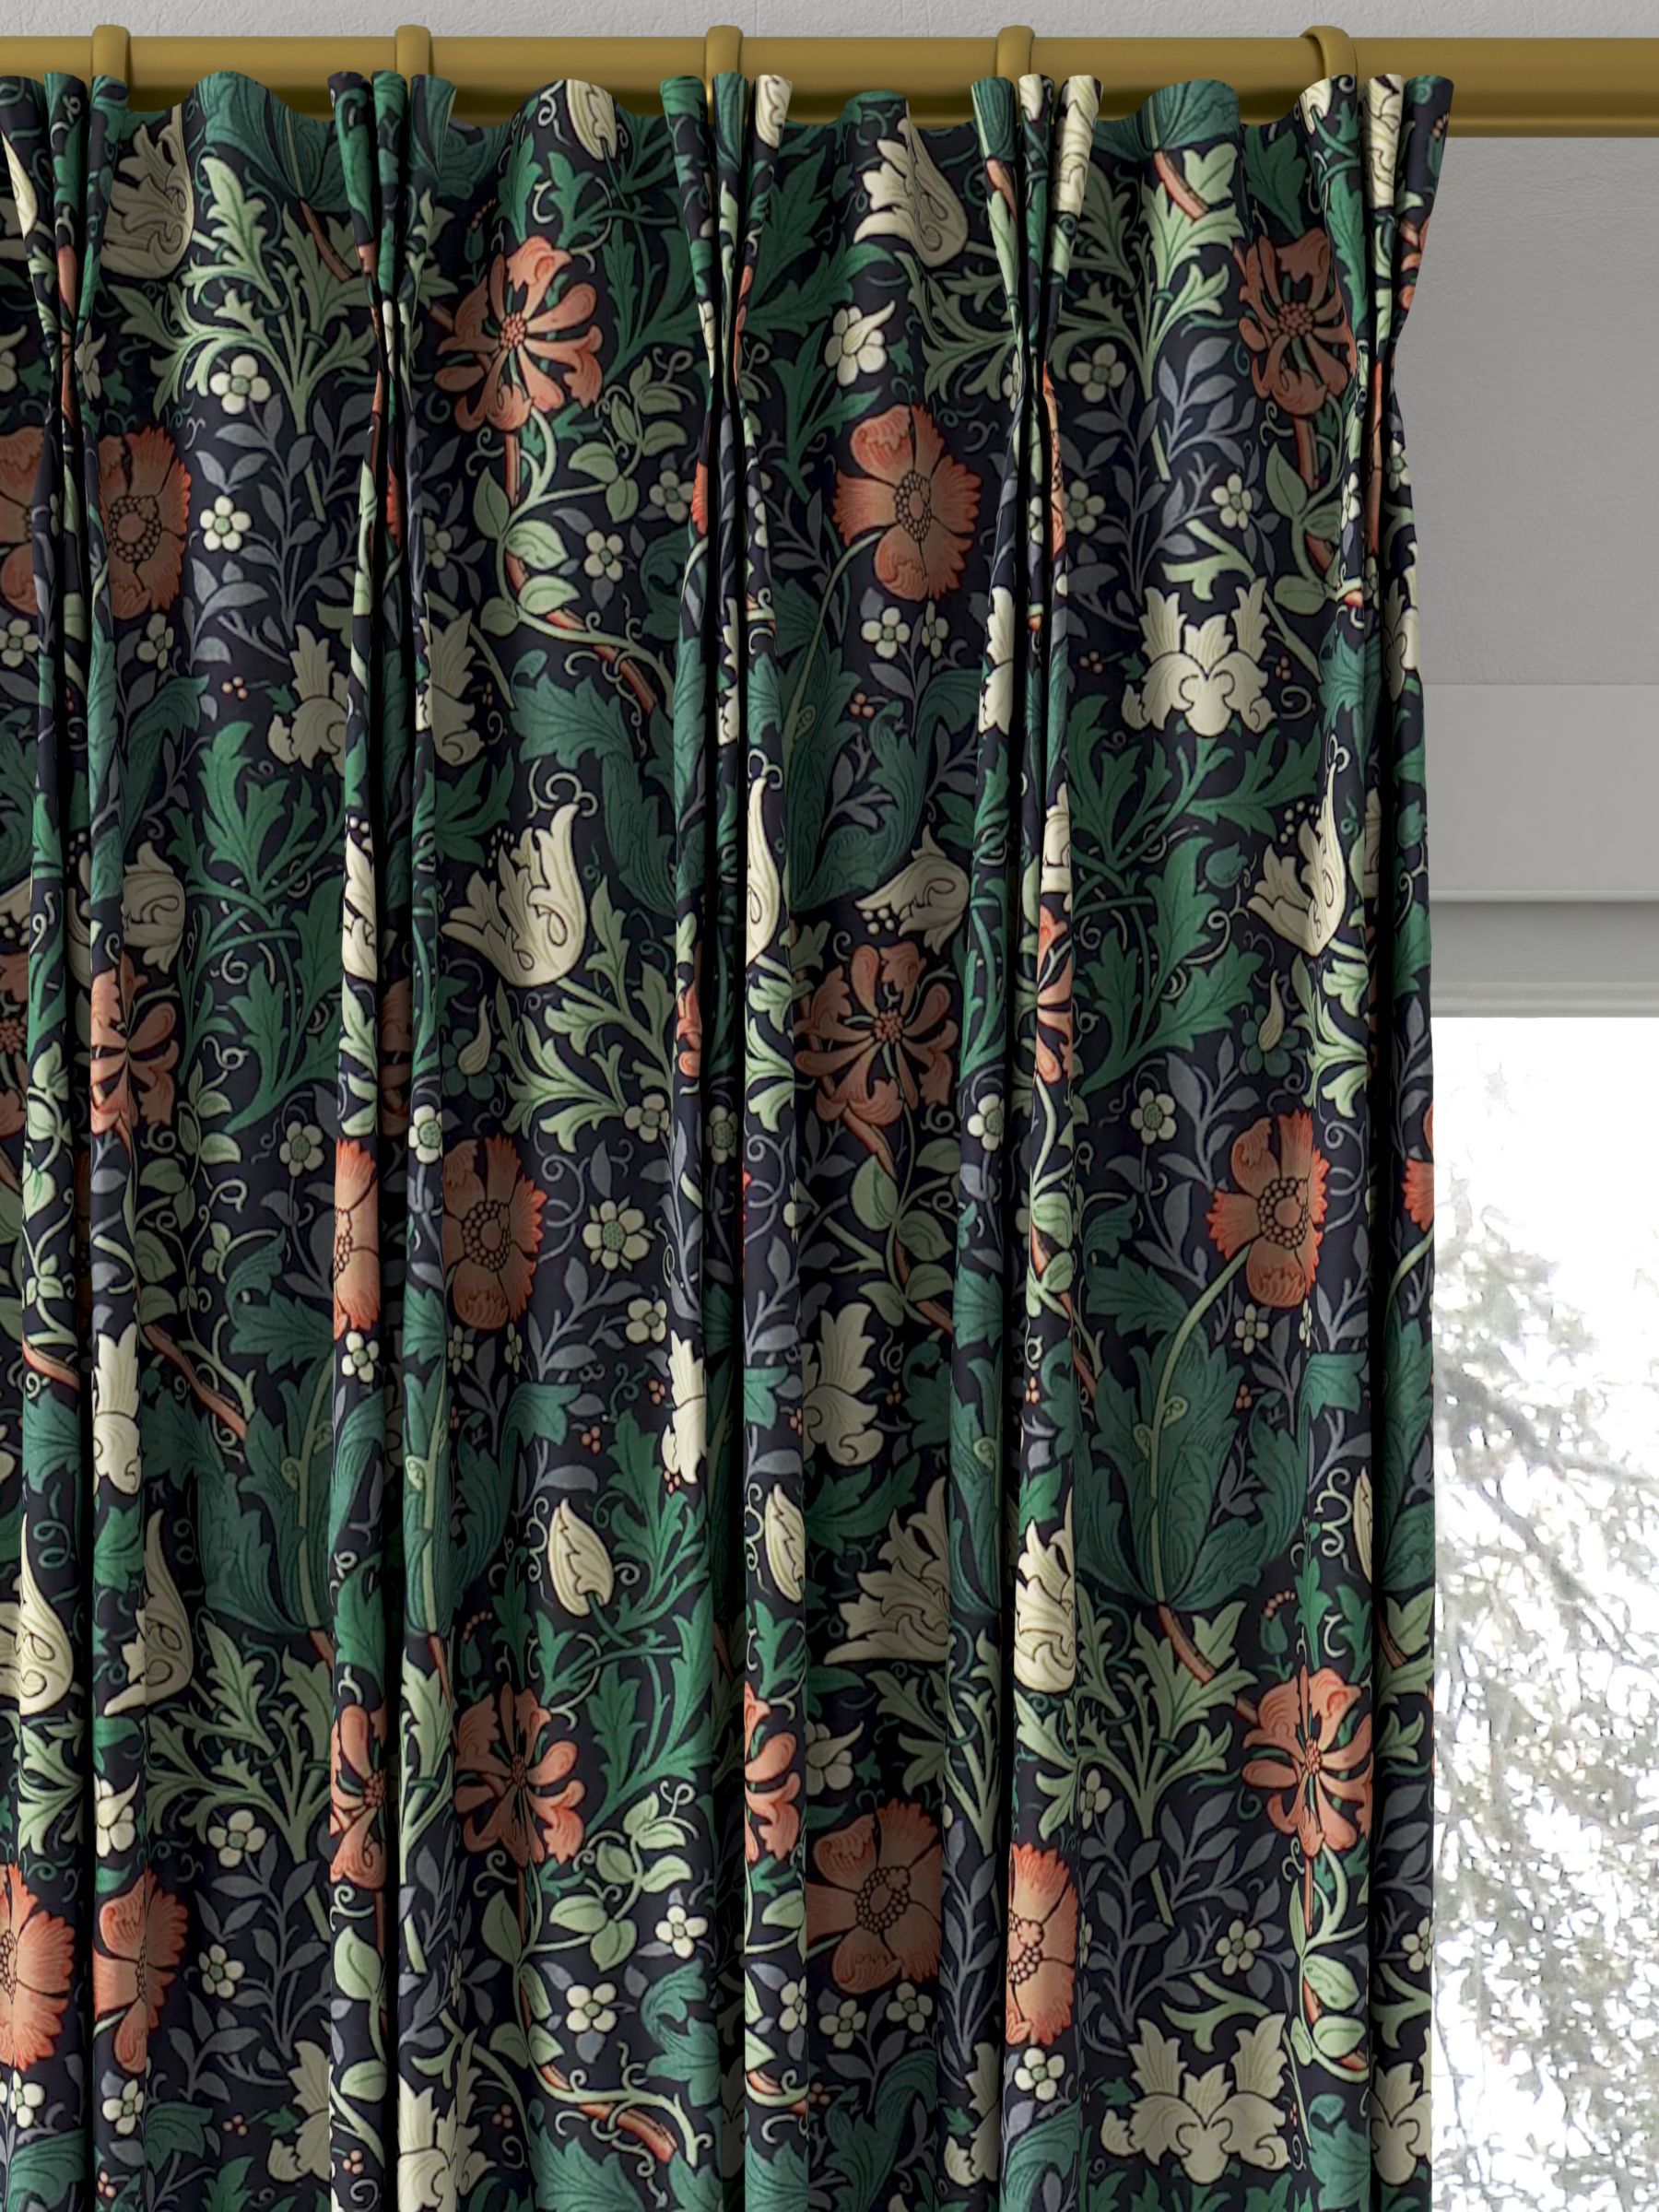 Morris & Co. Compton Made to Measure Curtains, Indigo/Green